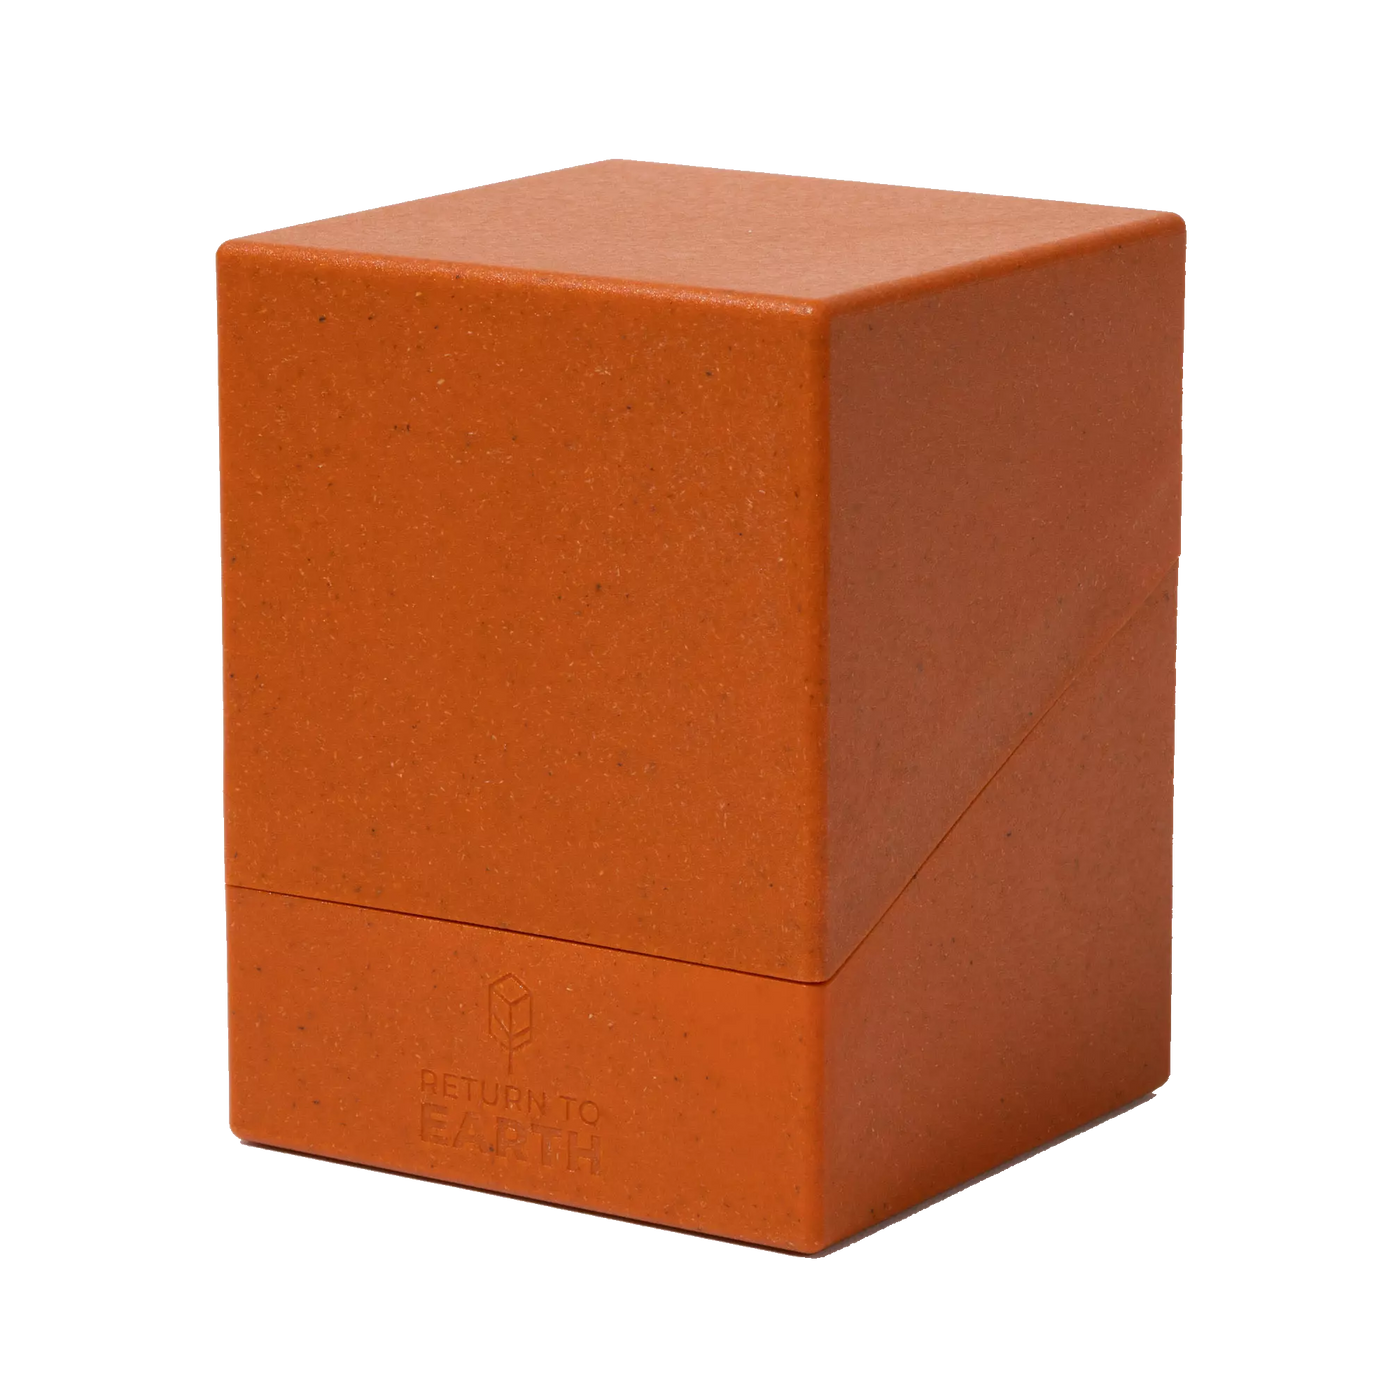 Deck Box Boulder Return to Earth orange